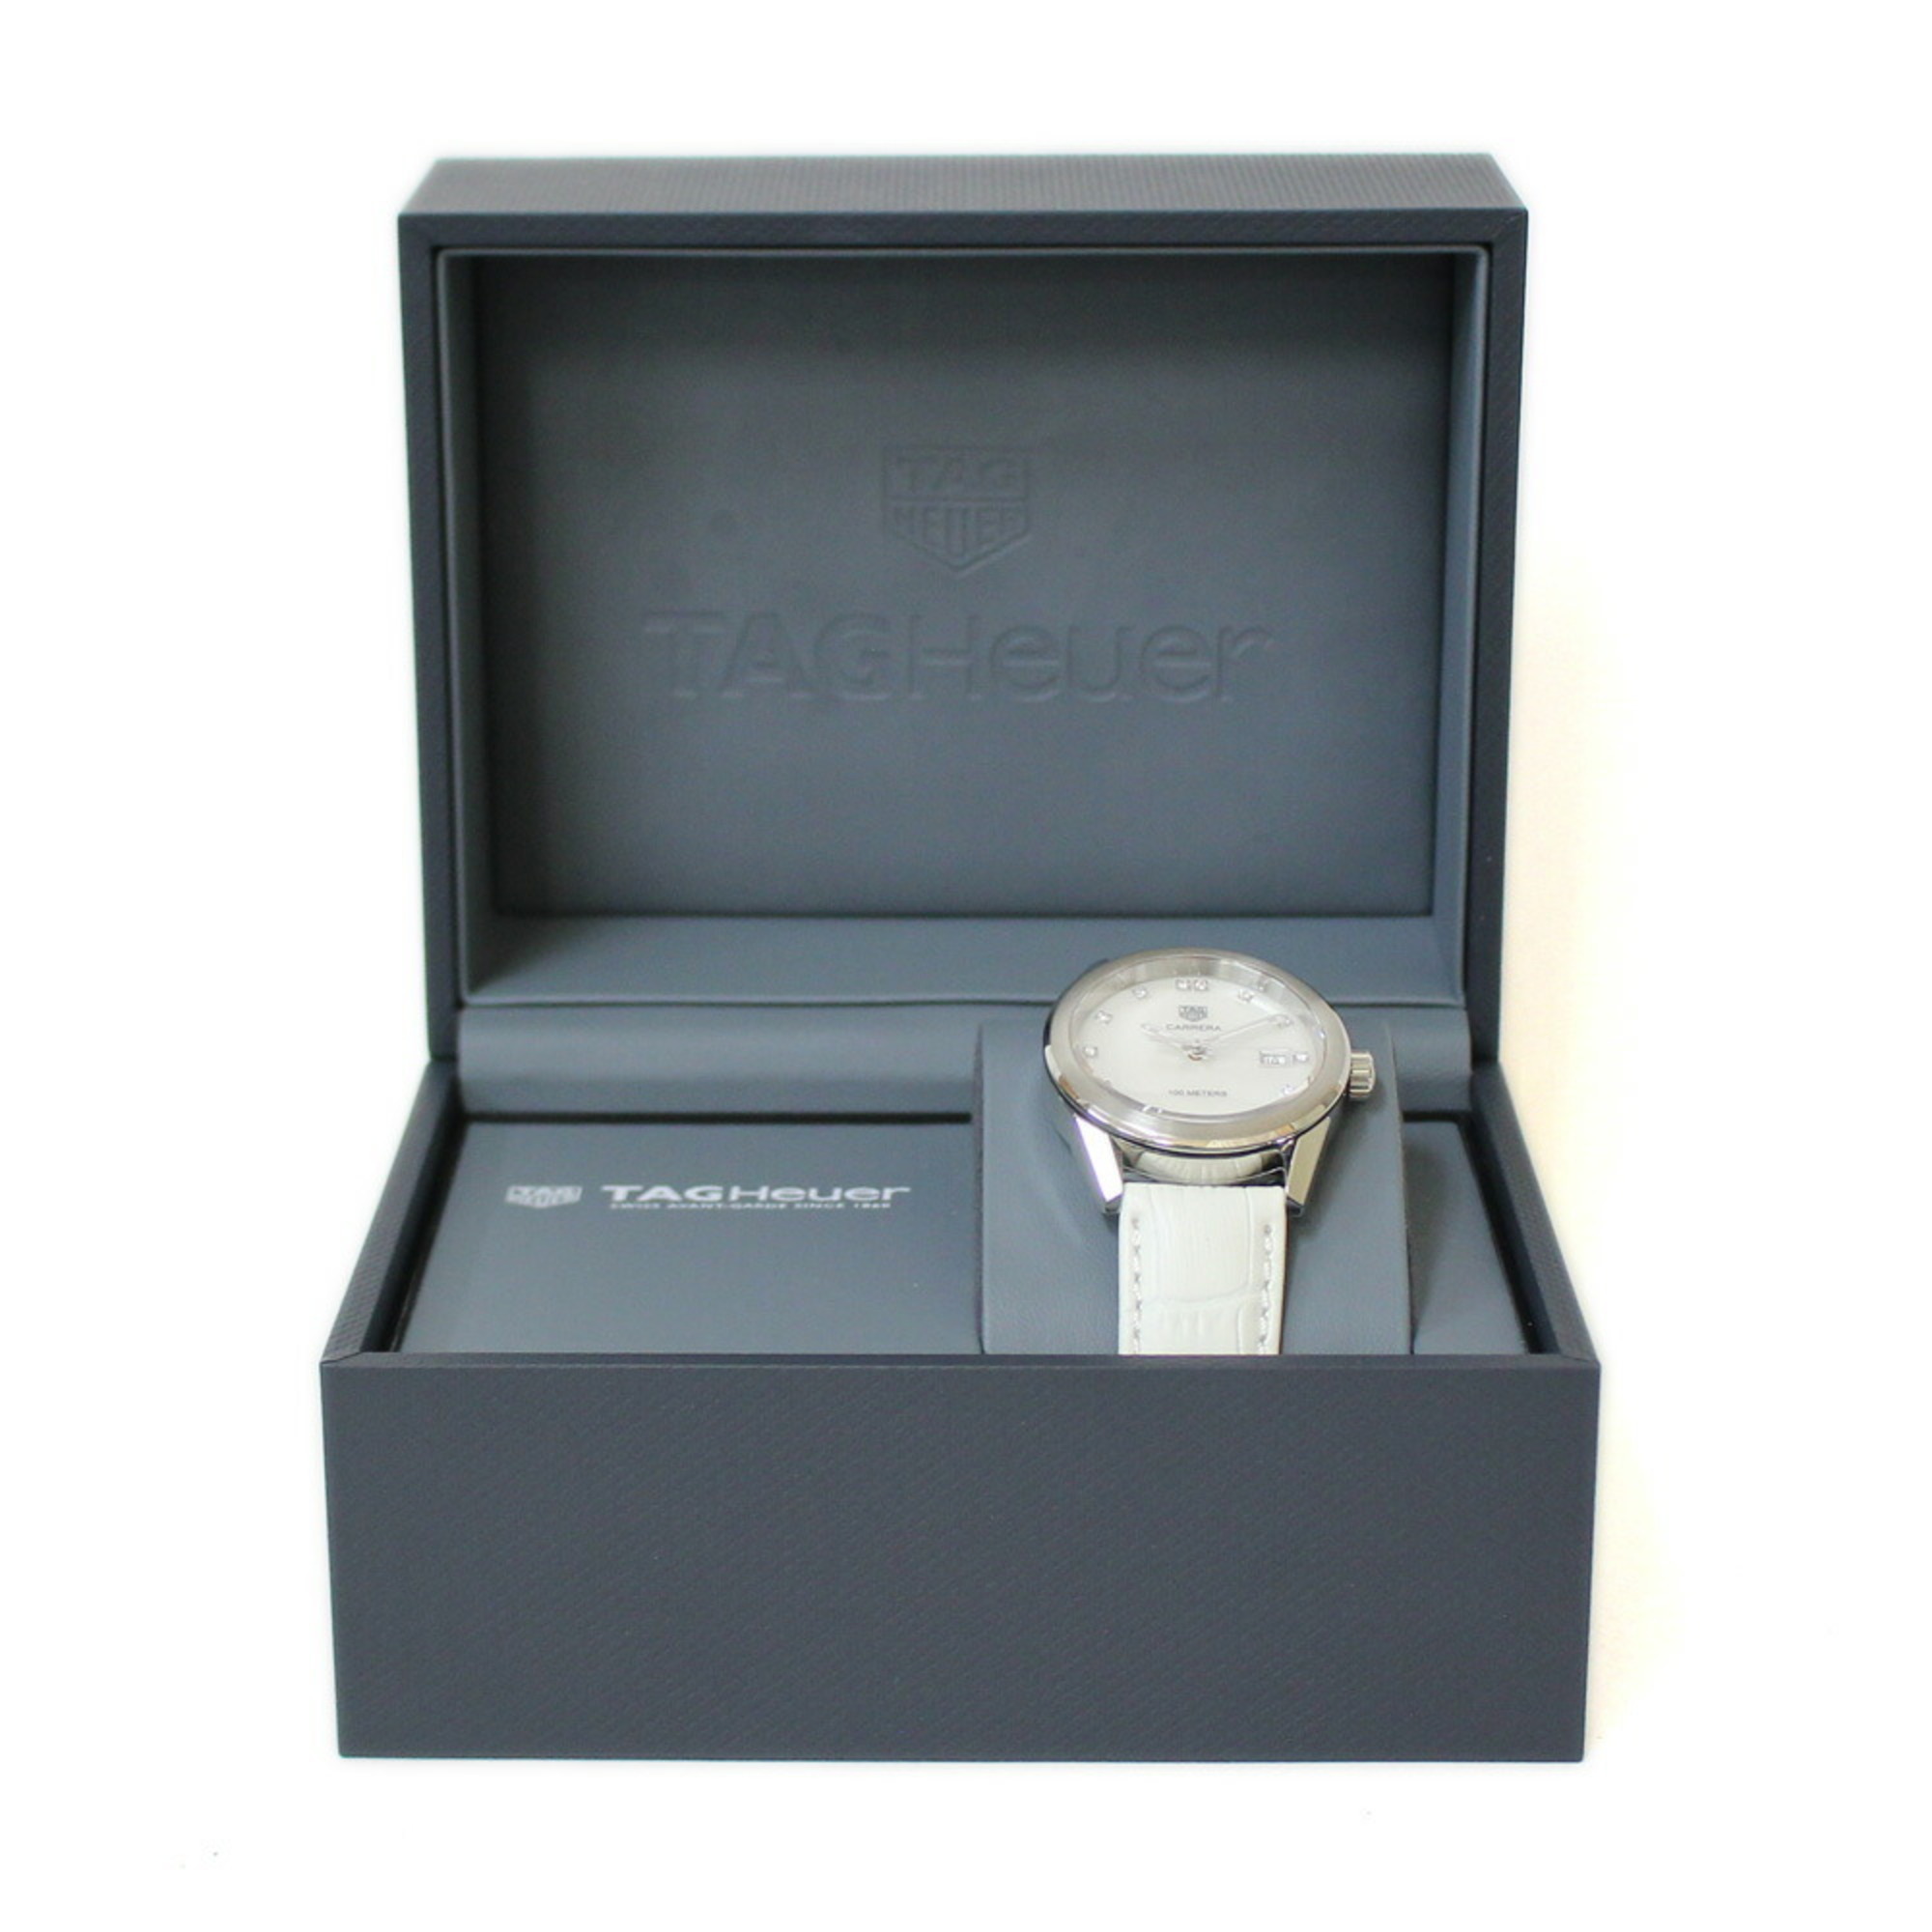 Tag Heuer TAG HEUER Carrera watch stainless steel WBG1312 quartz unisex